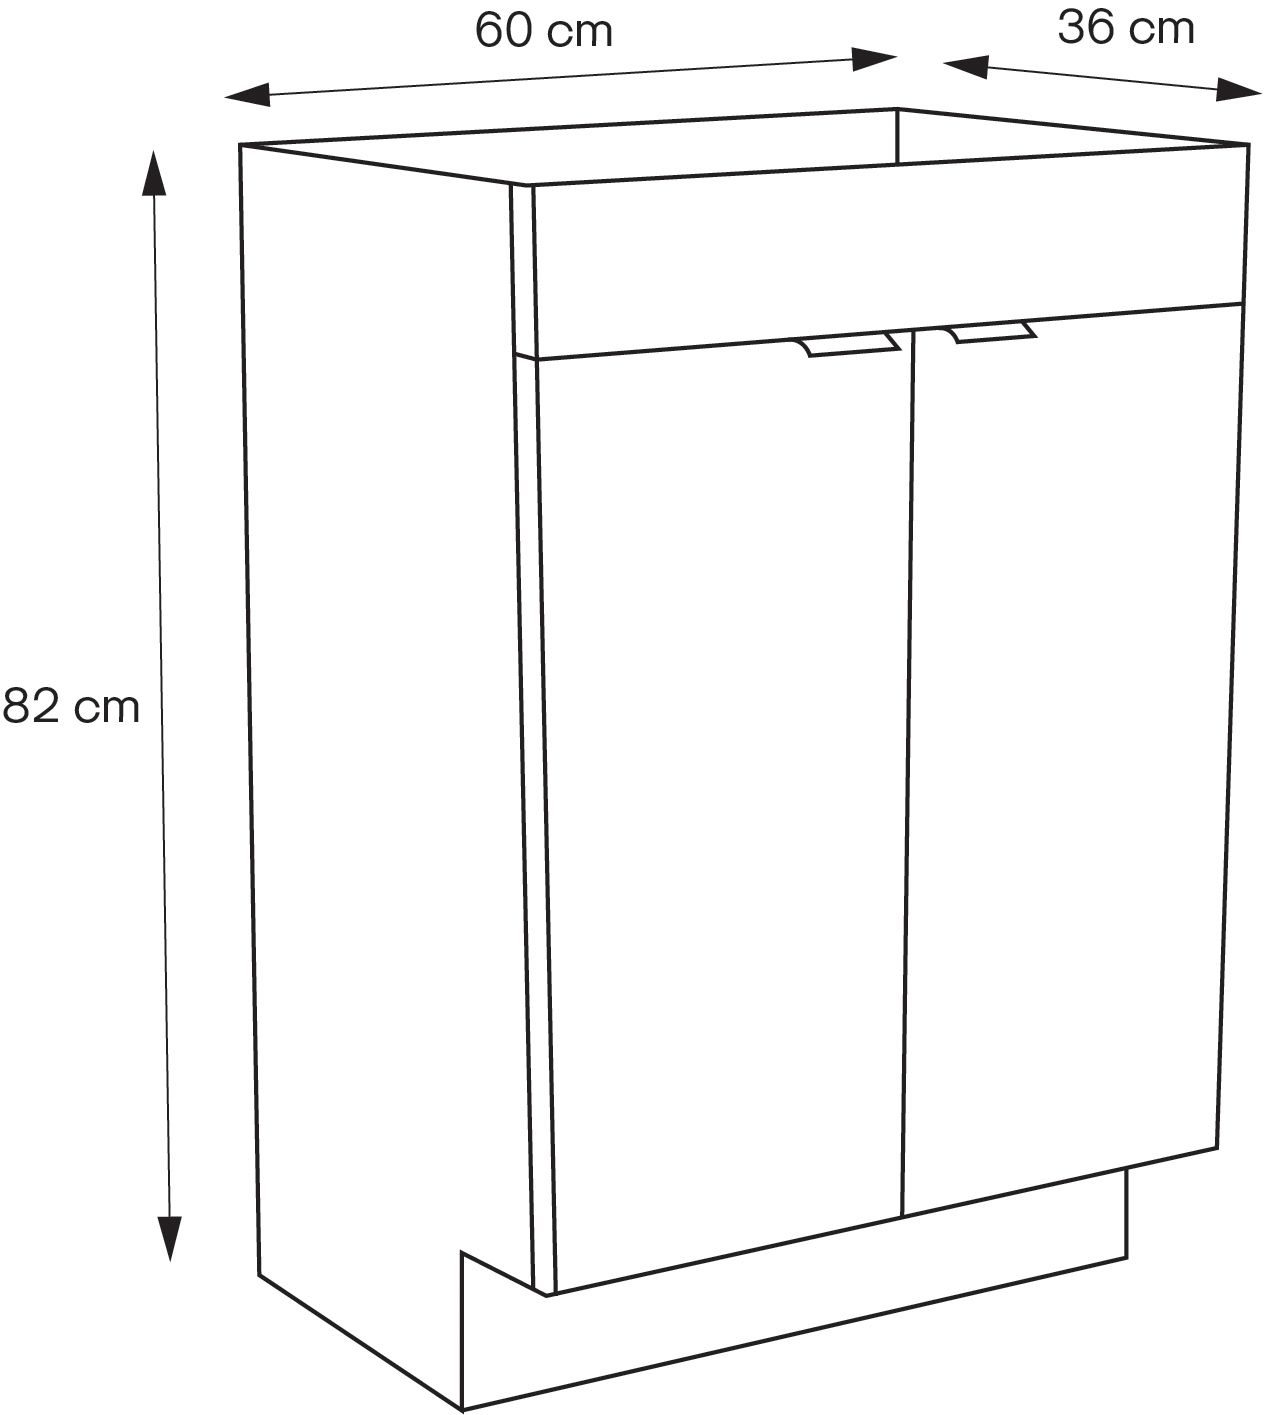 GoodHome Imandra Slimline Gloss Grey Double Bathroom Cabinet (H) 820mm (W) 600mm